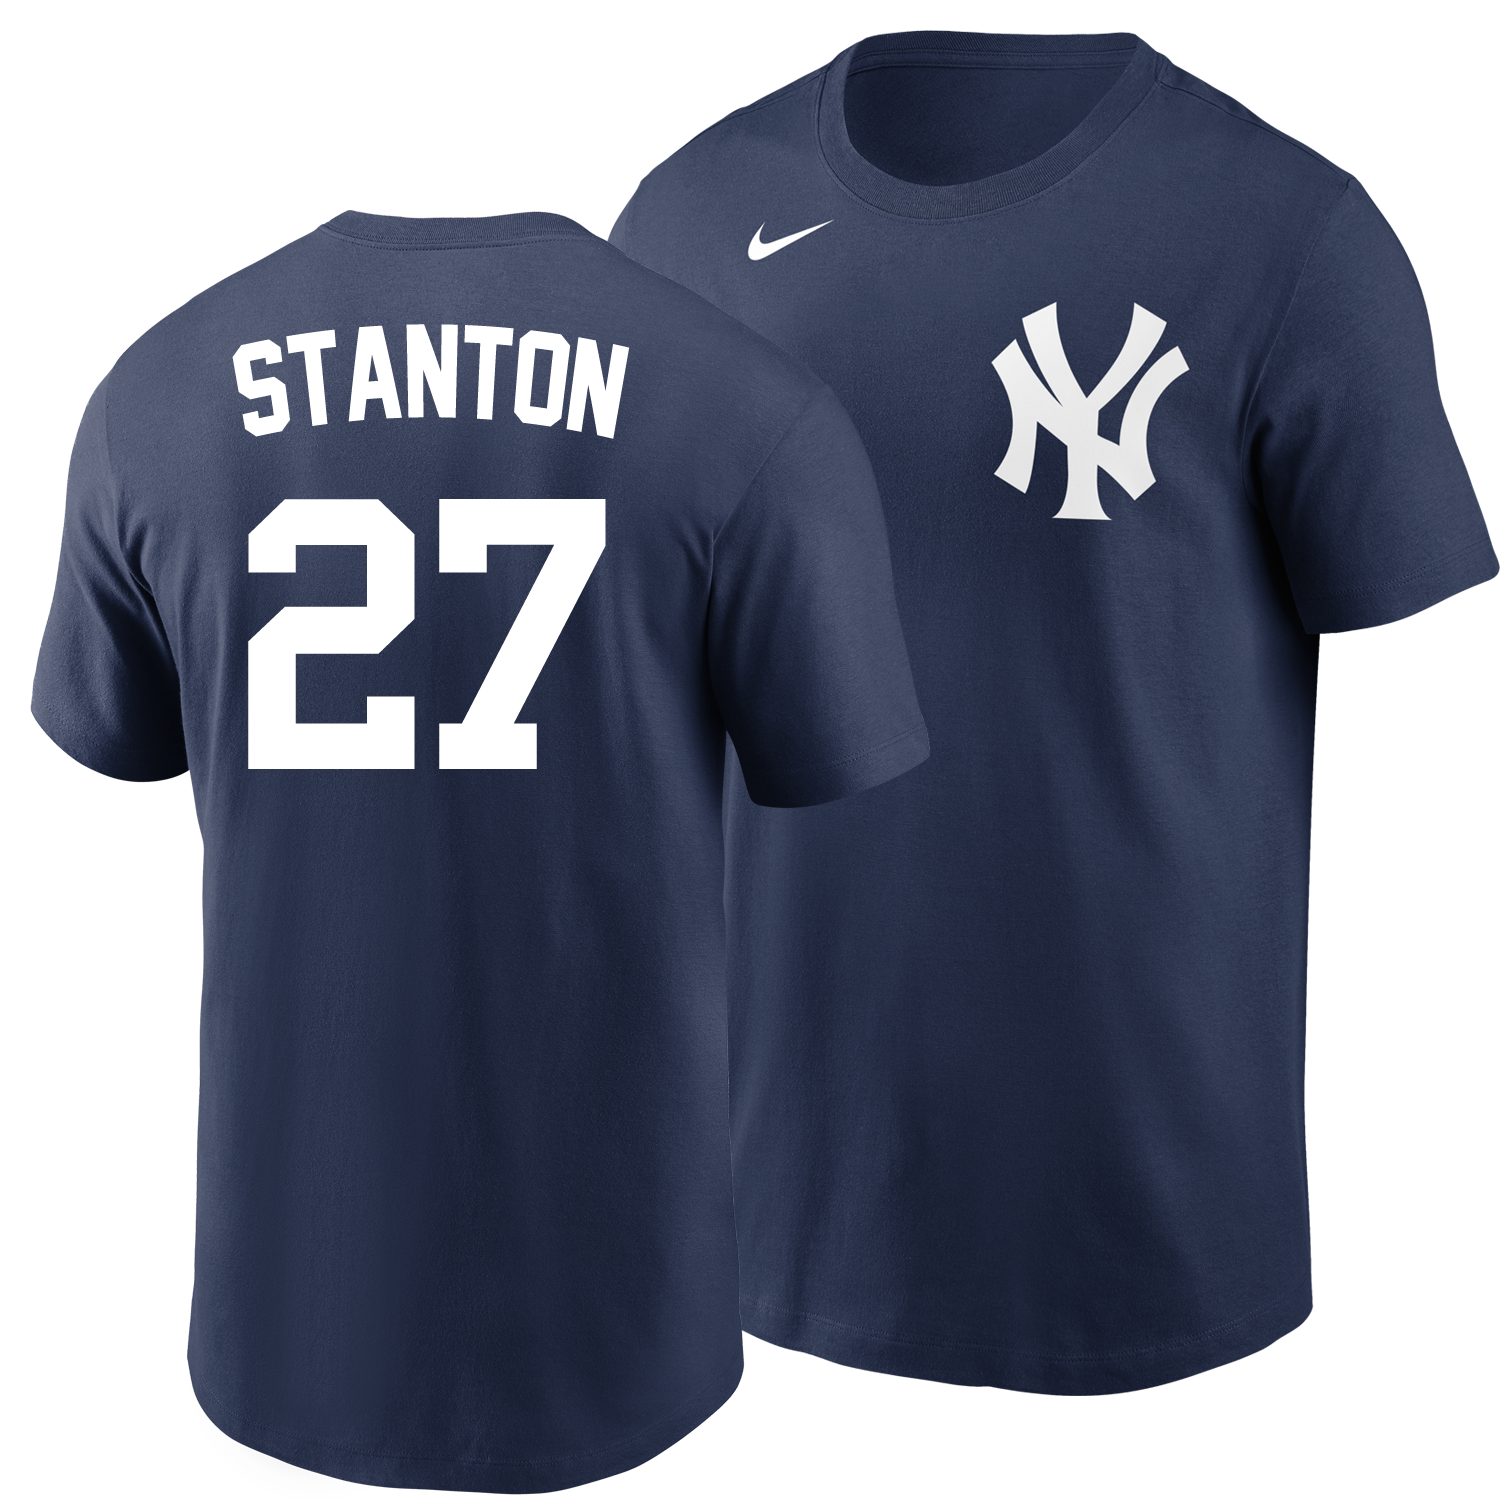 Women's Majestic Threads Giancarlo Stanton Navy New York Yankees Name &  Number 3/4 Sleeve Raglan T-Shirt